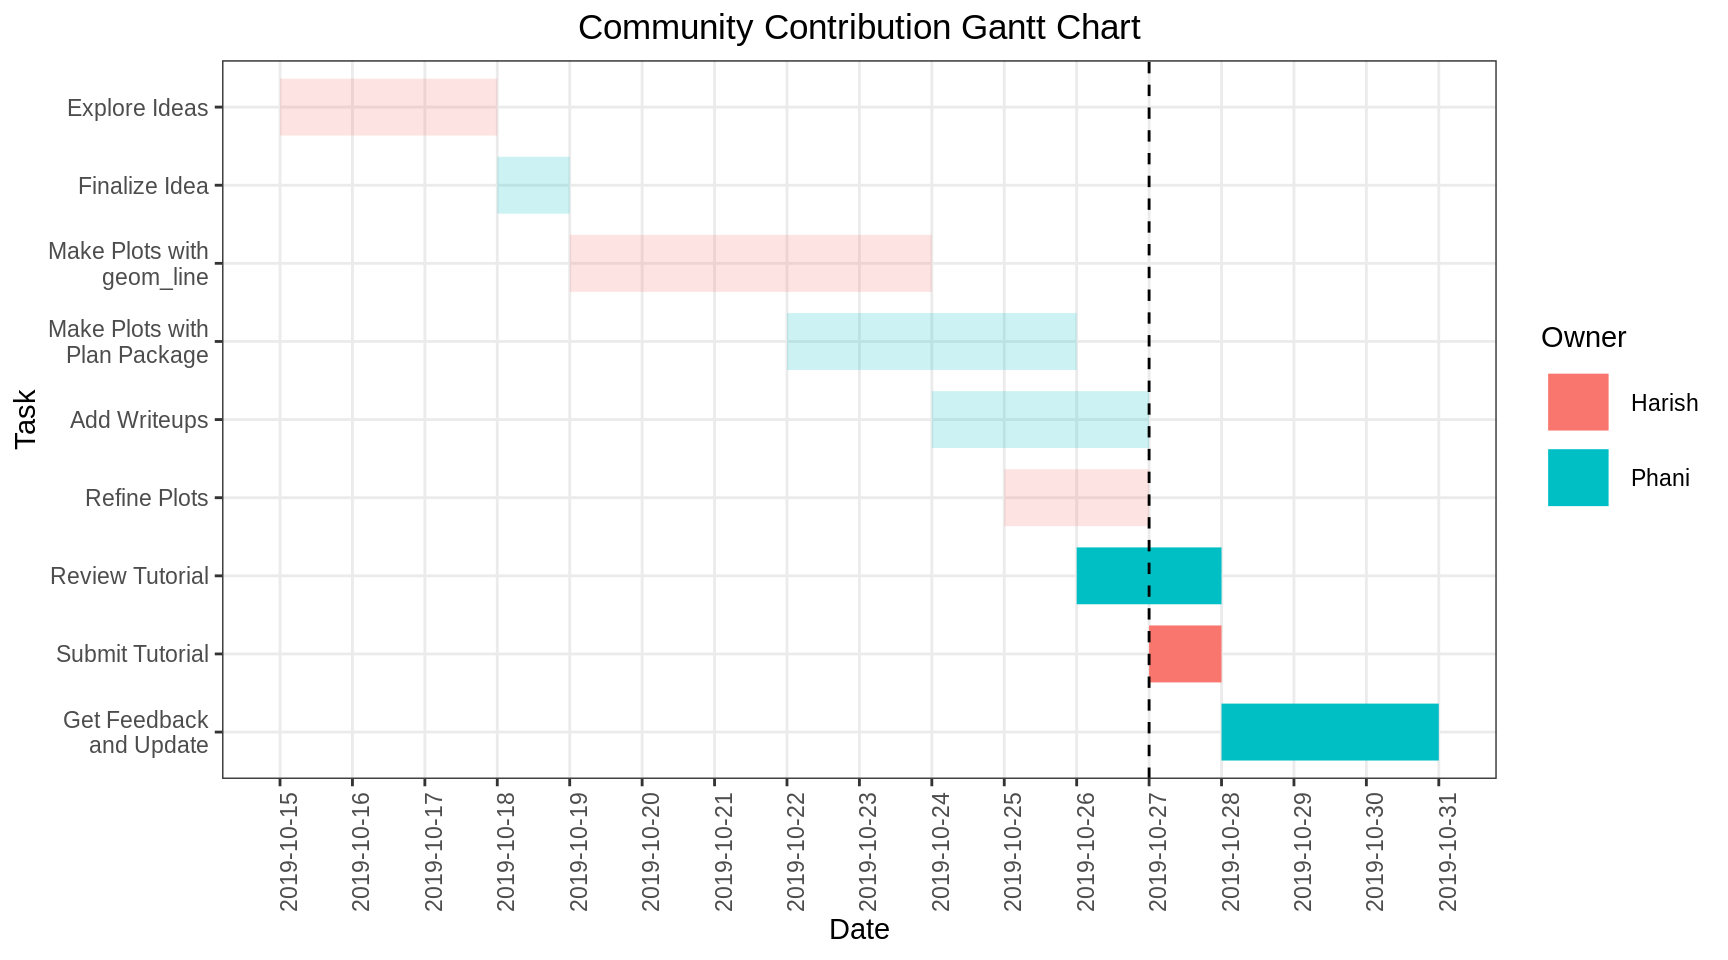 Chapter 12 Gantt charts | Community contributions for EDAV Fall 2019